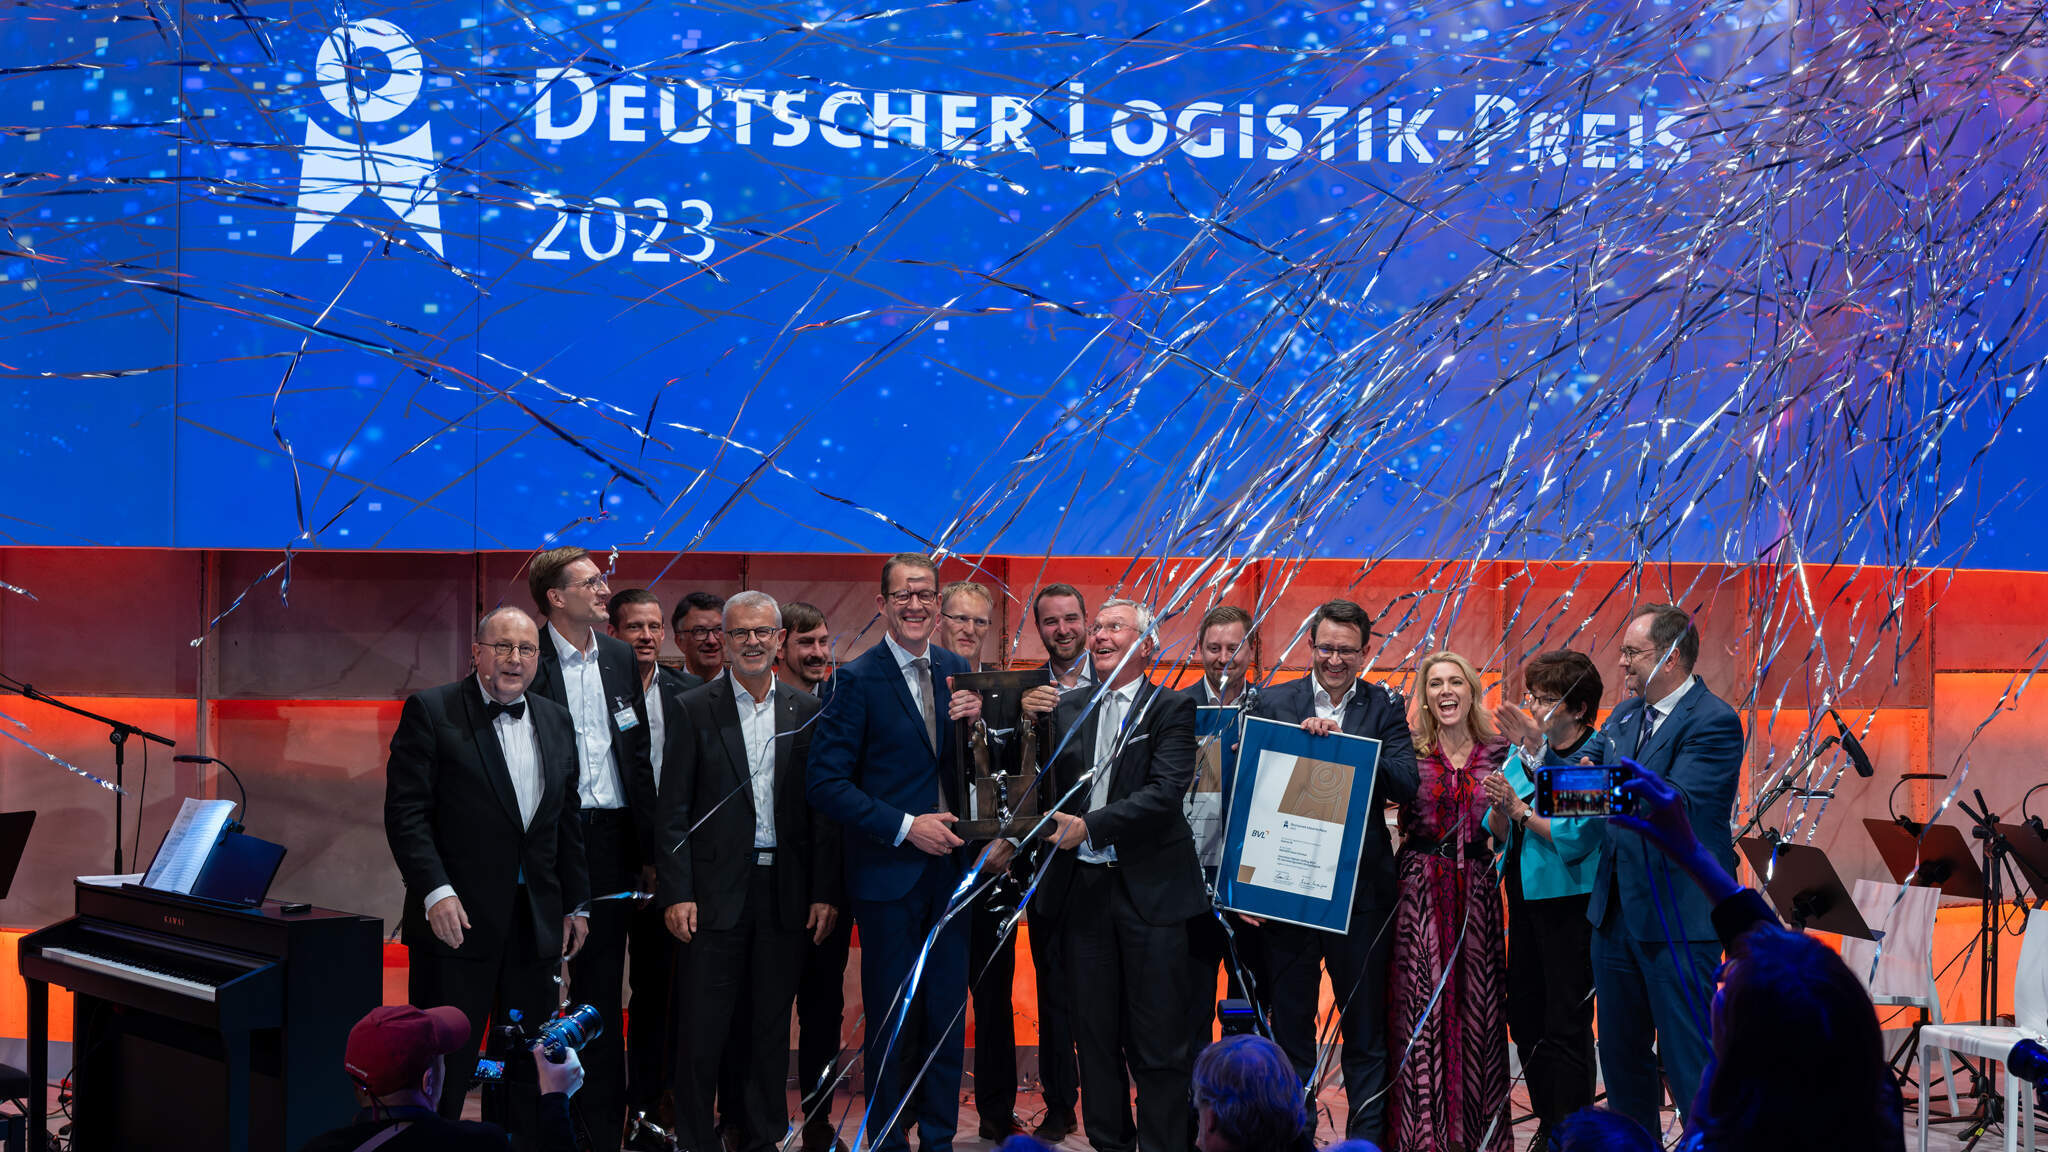 Burkhard Eling, DACHSER CEO, and Prof. Dr. Dr. h.c.. Michael ten Hompel, Executive Director of the Fraunhofer IML, accept the German Logistics Award together with the Fraunhofer IML and DACHSER teams. Photo: BVL/Bublitz